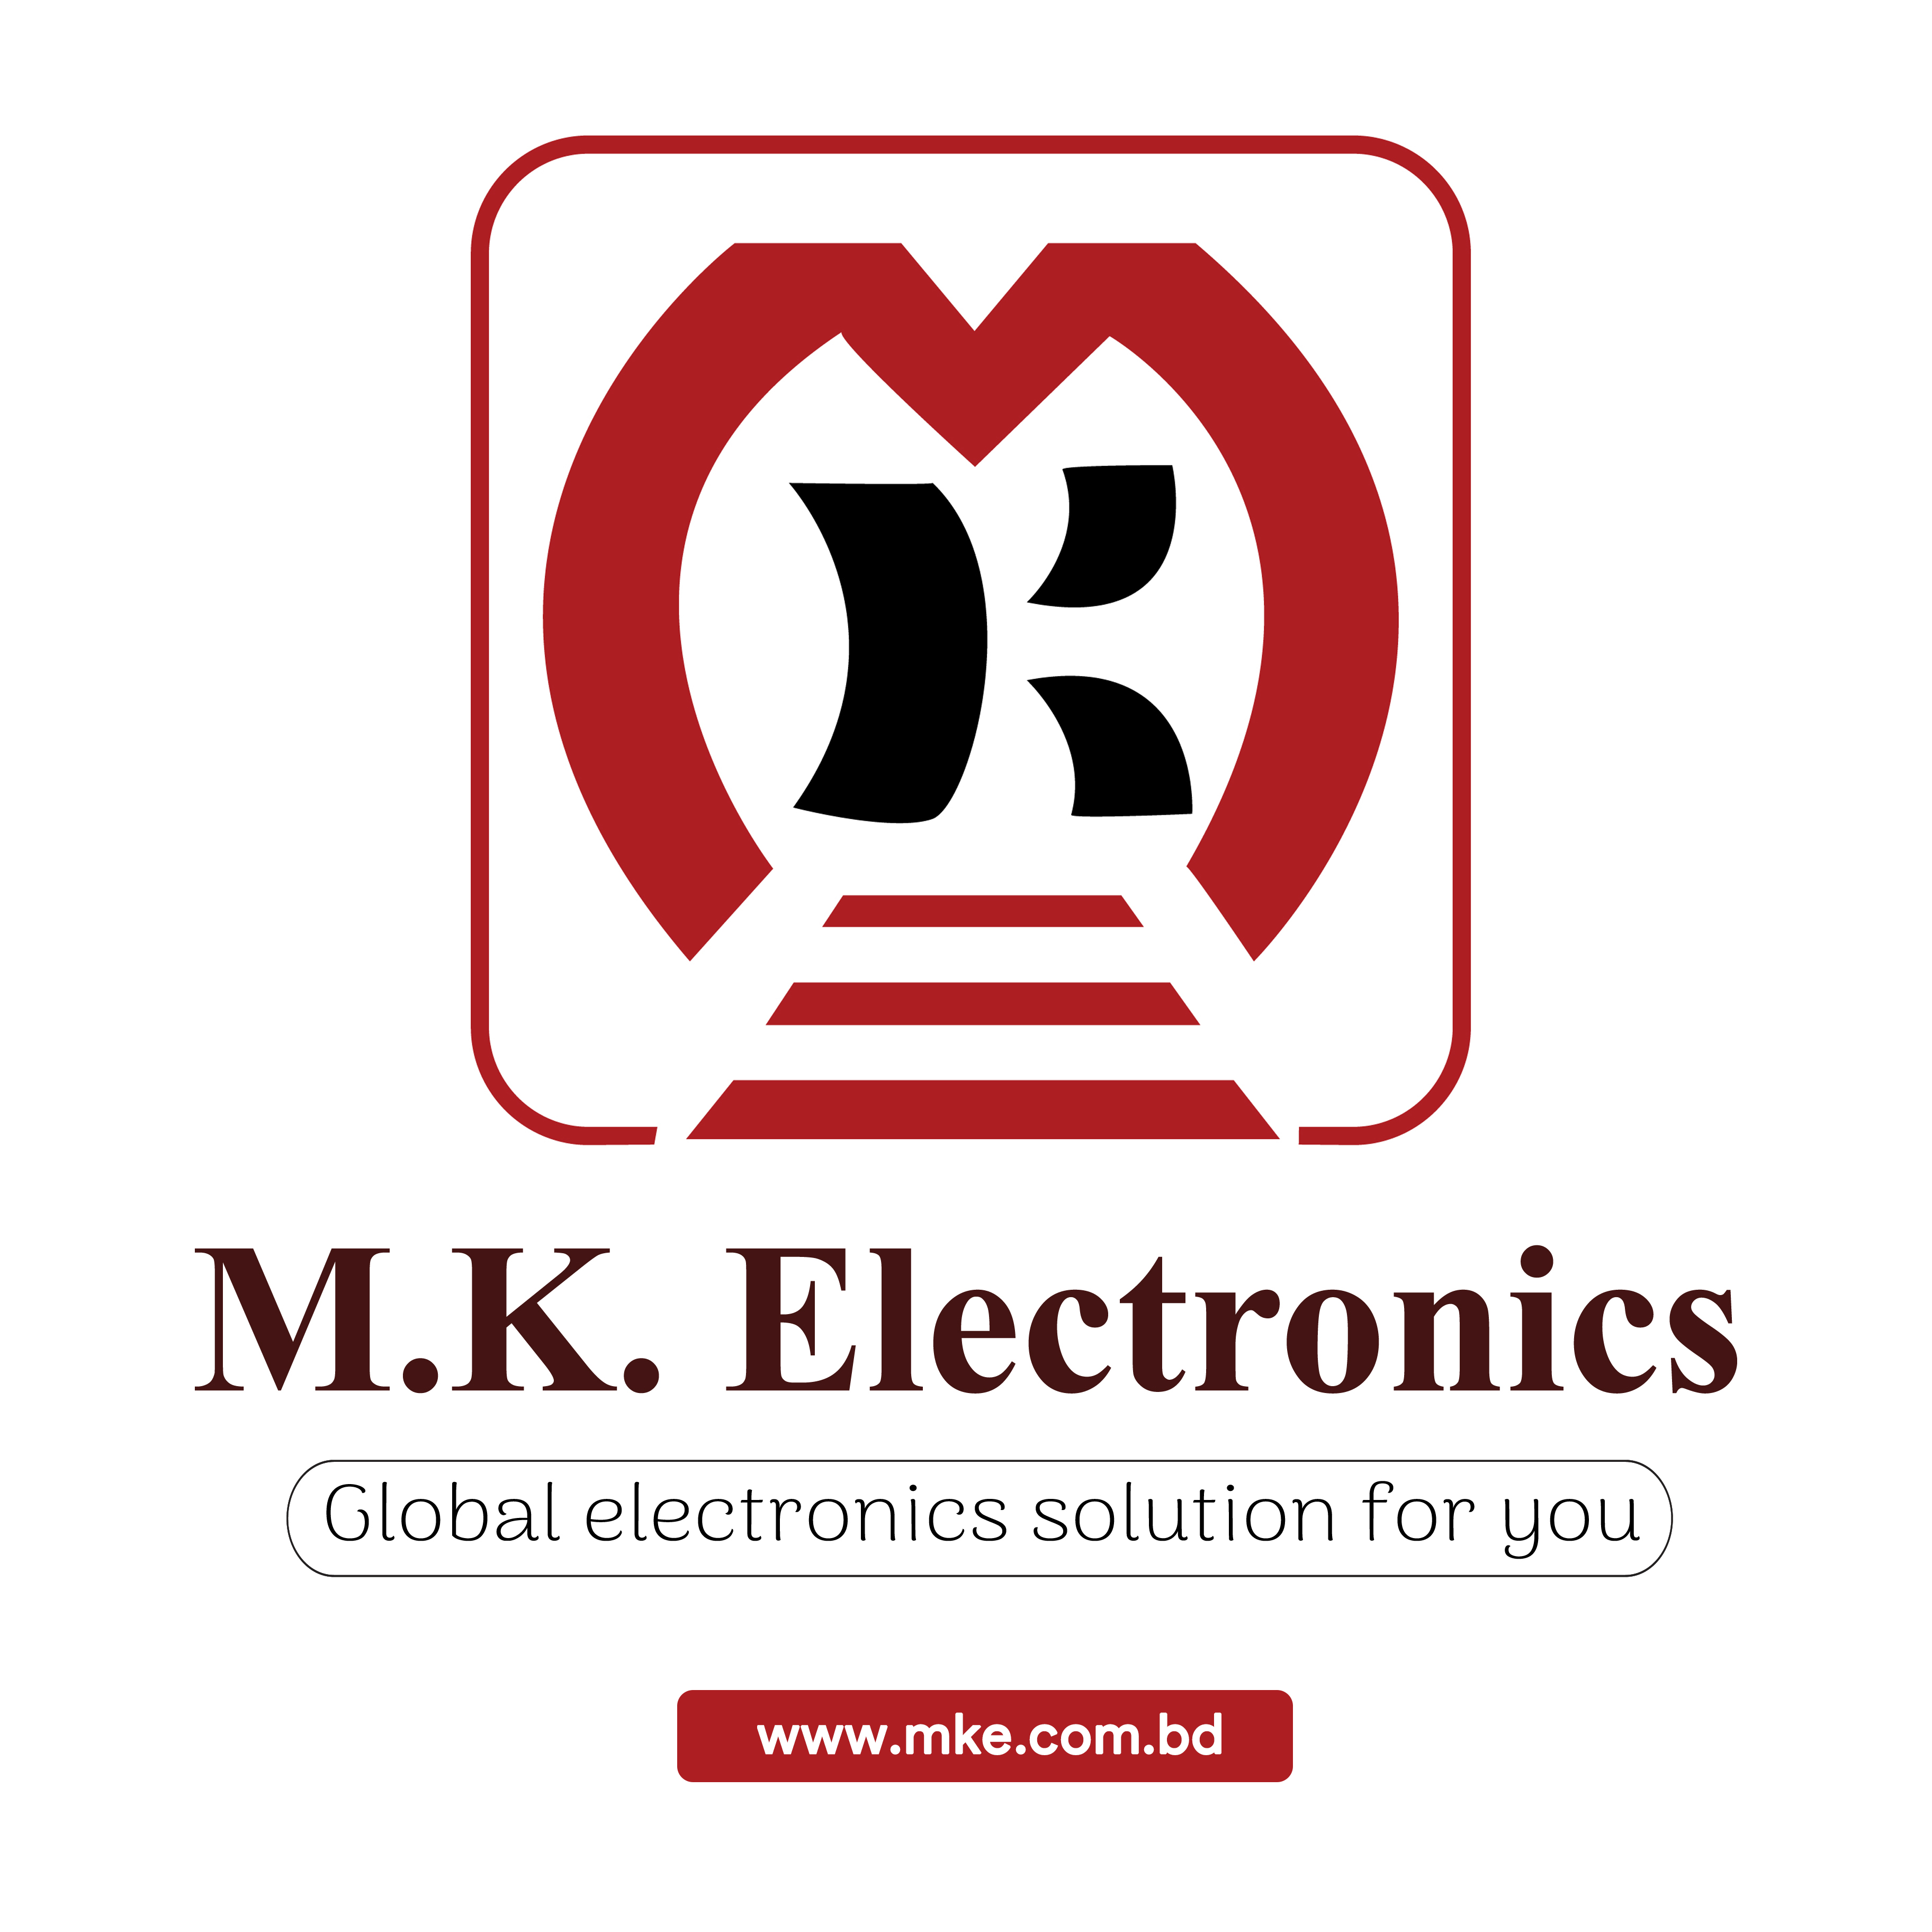 M.K. Electronics